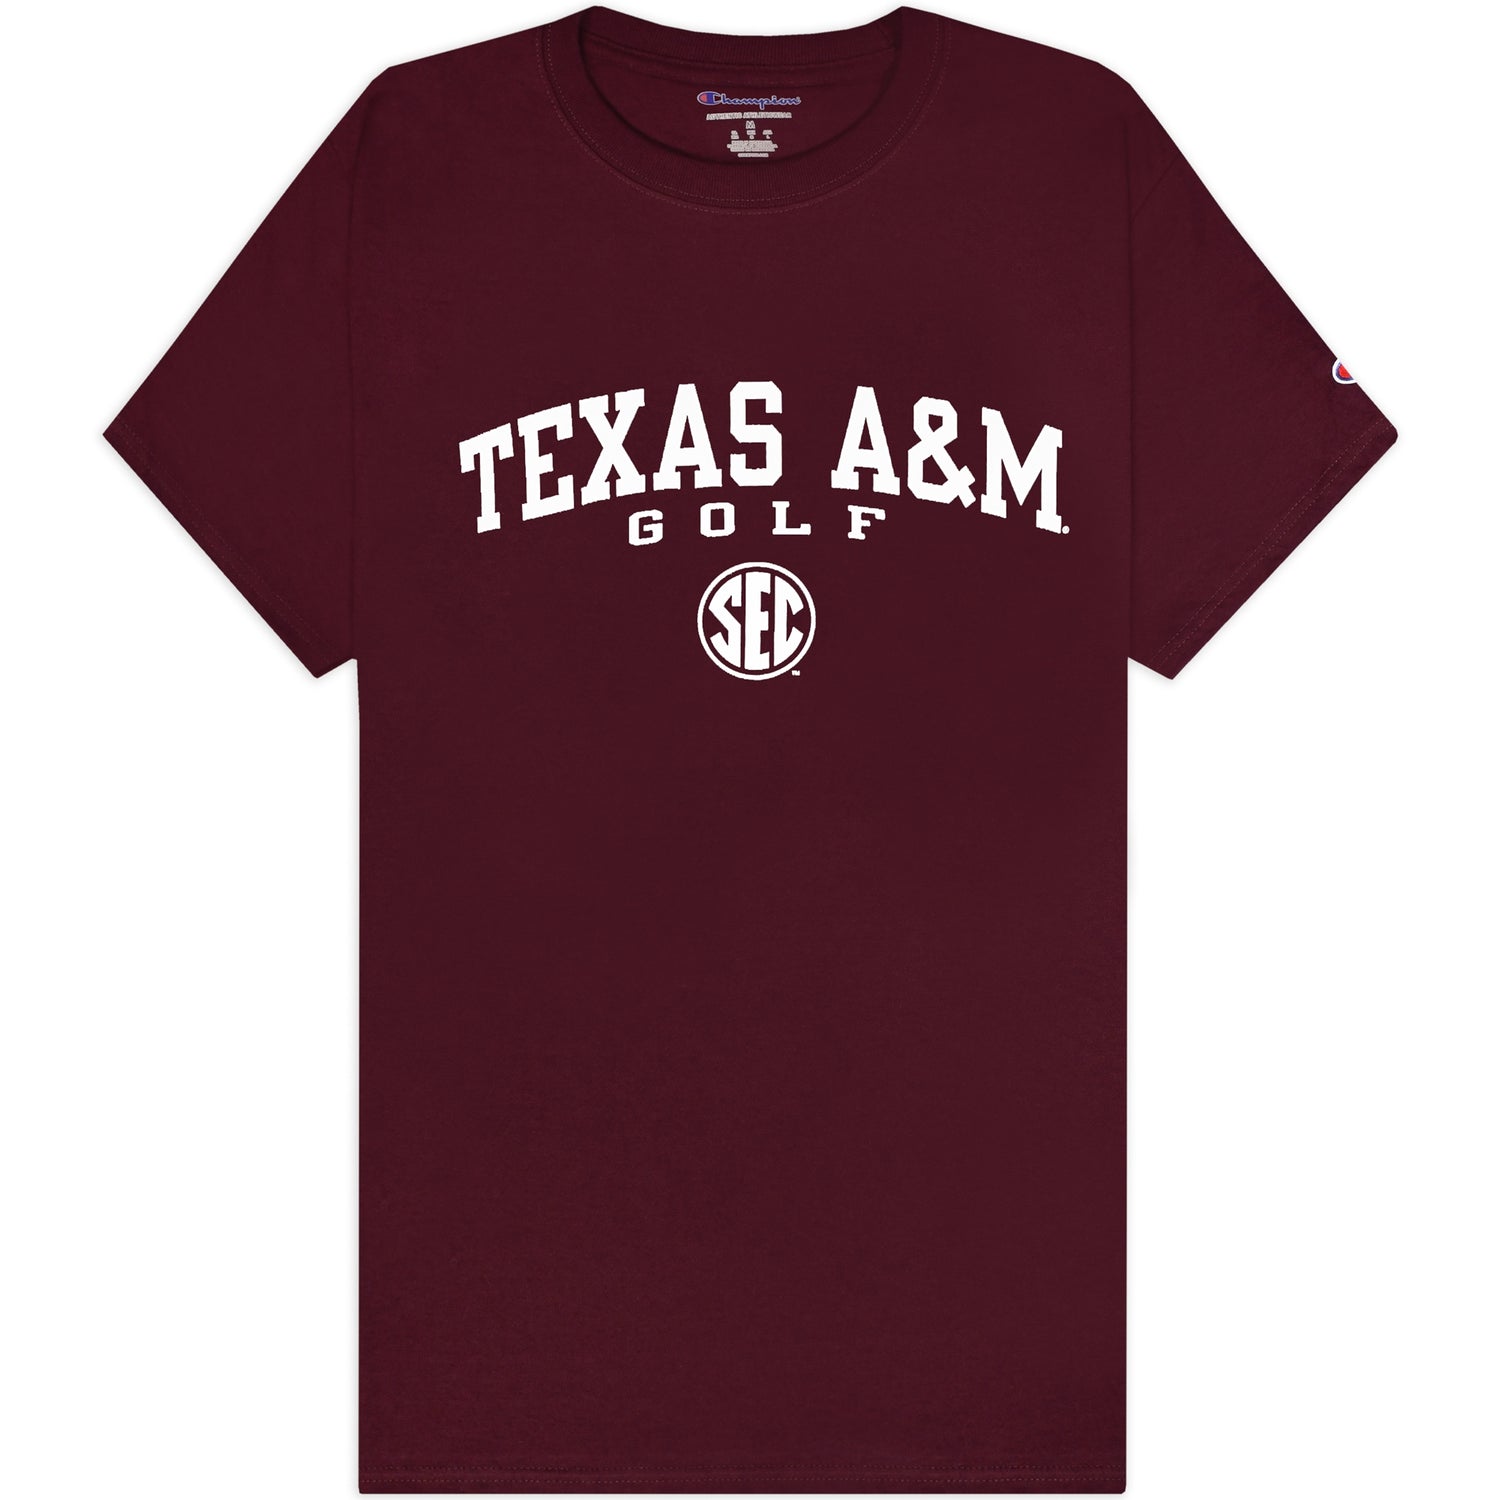 Texas A&M Champion Golf SEC T-Shirt